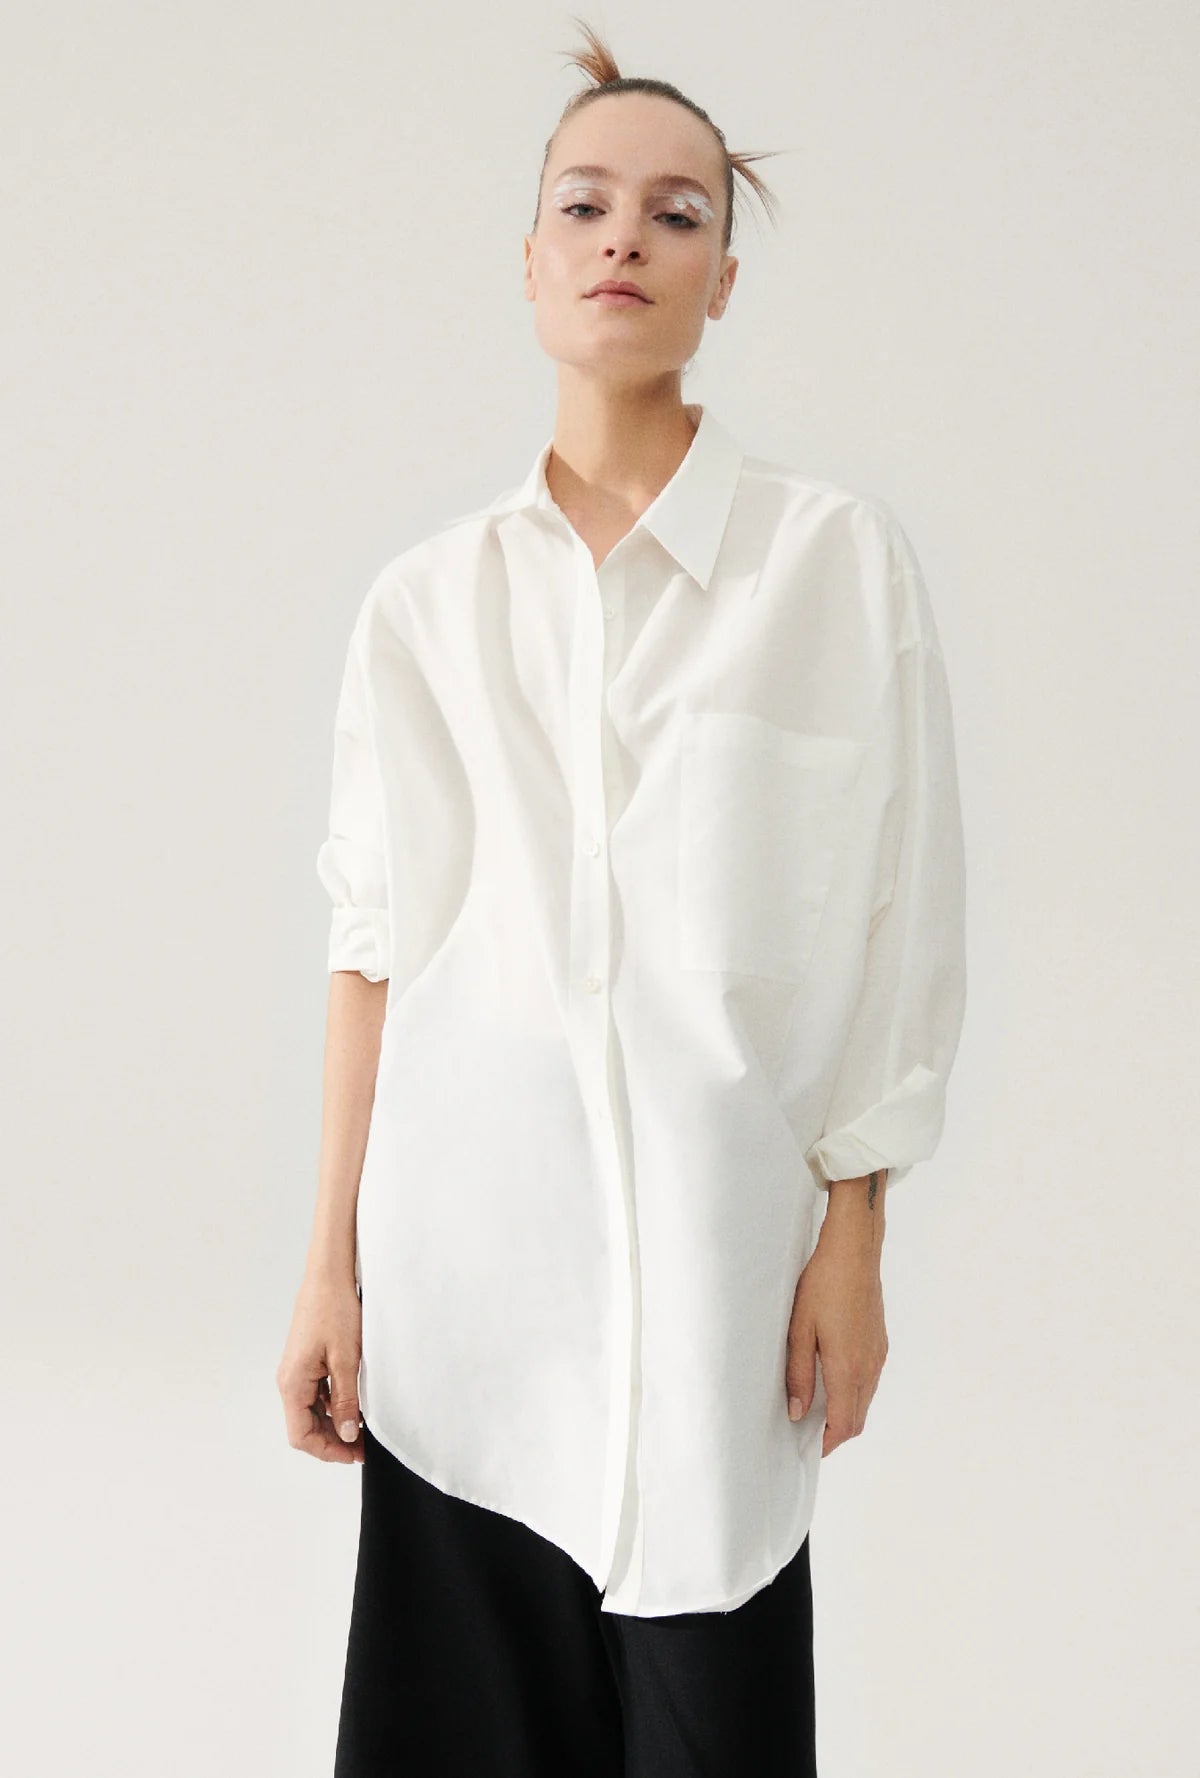 Cotton Silk Round Shirt in White by Silk Laundry